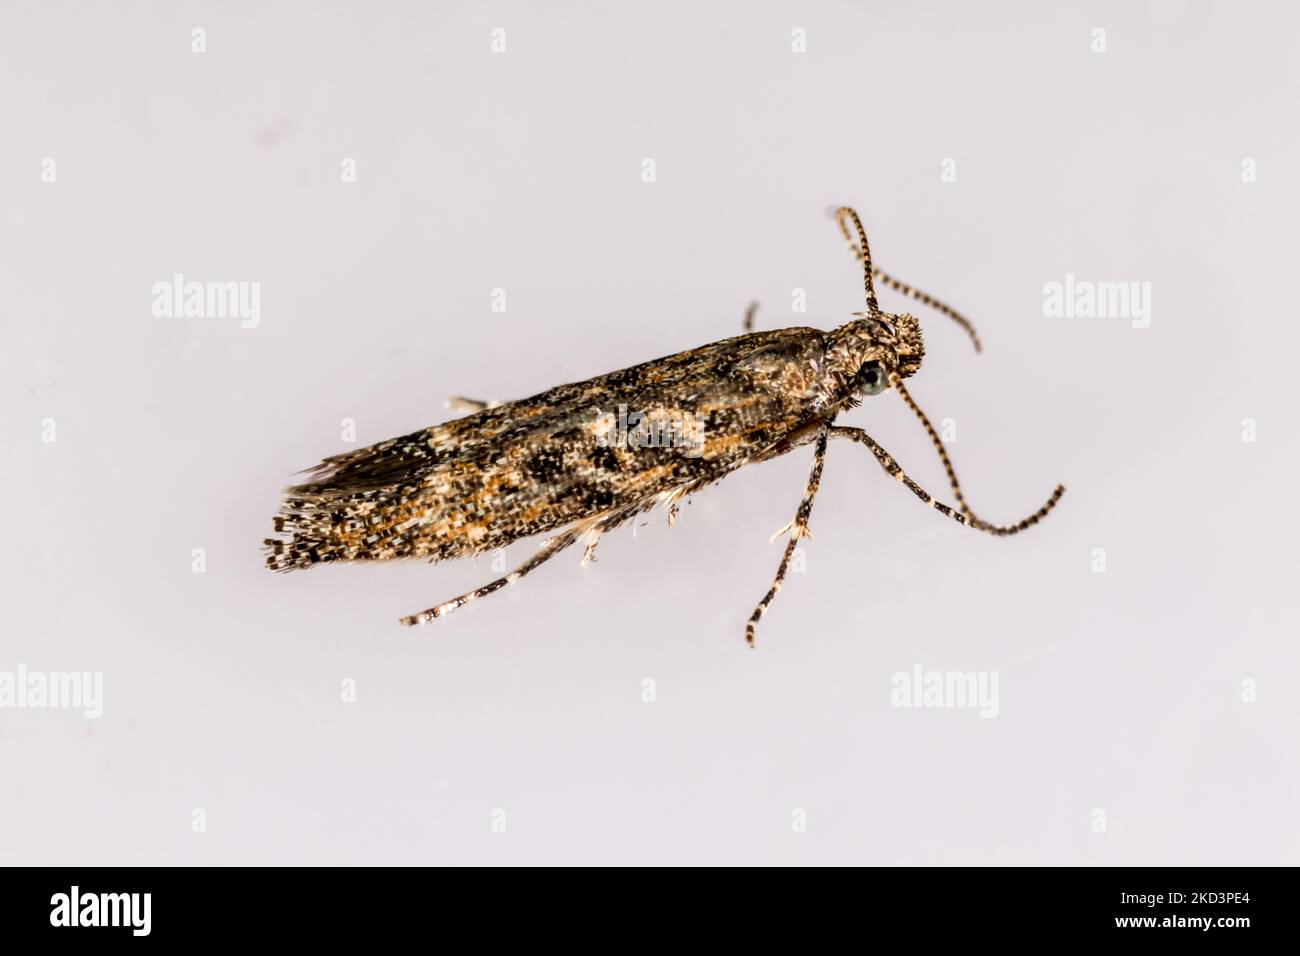 Tuta absoluta (Meyrick, 1917) - Gelechiidae, Gelechiinae - Tomato Leafminer moth on a neutral background.  A serious pest of tomato crops. Stock Photo